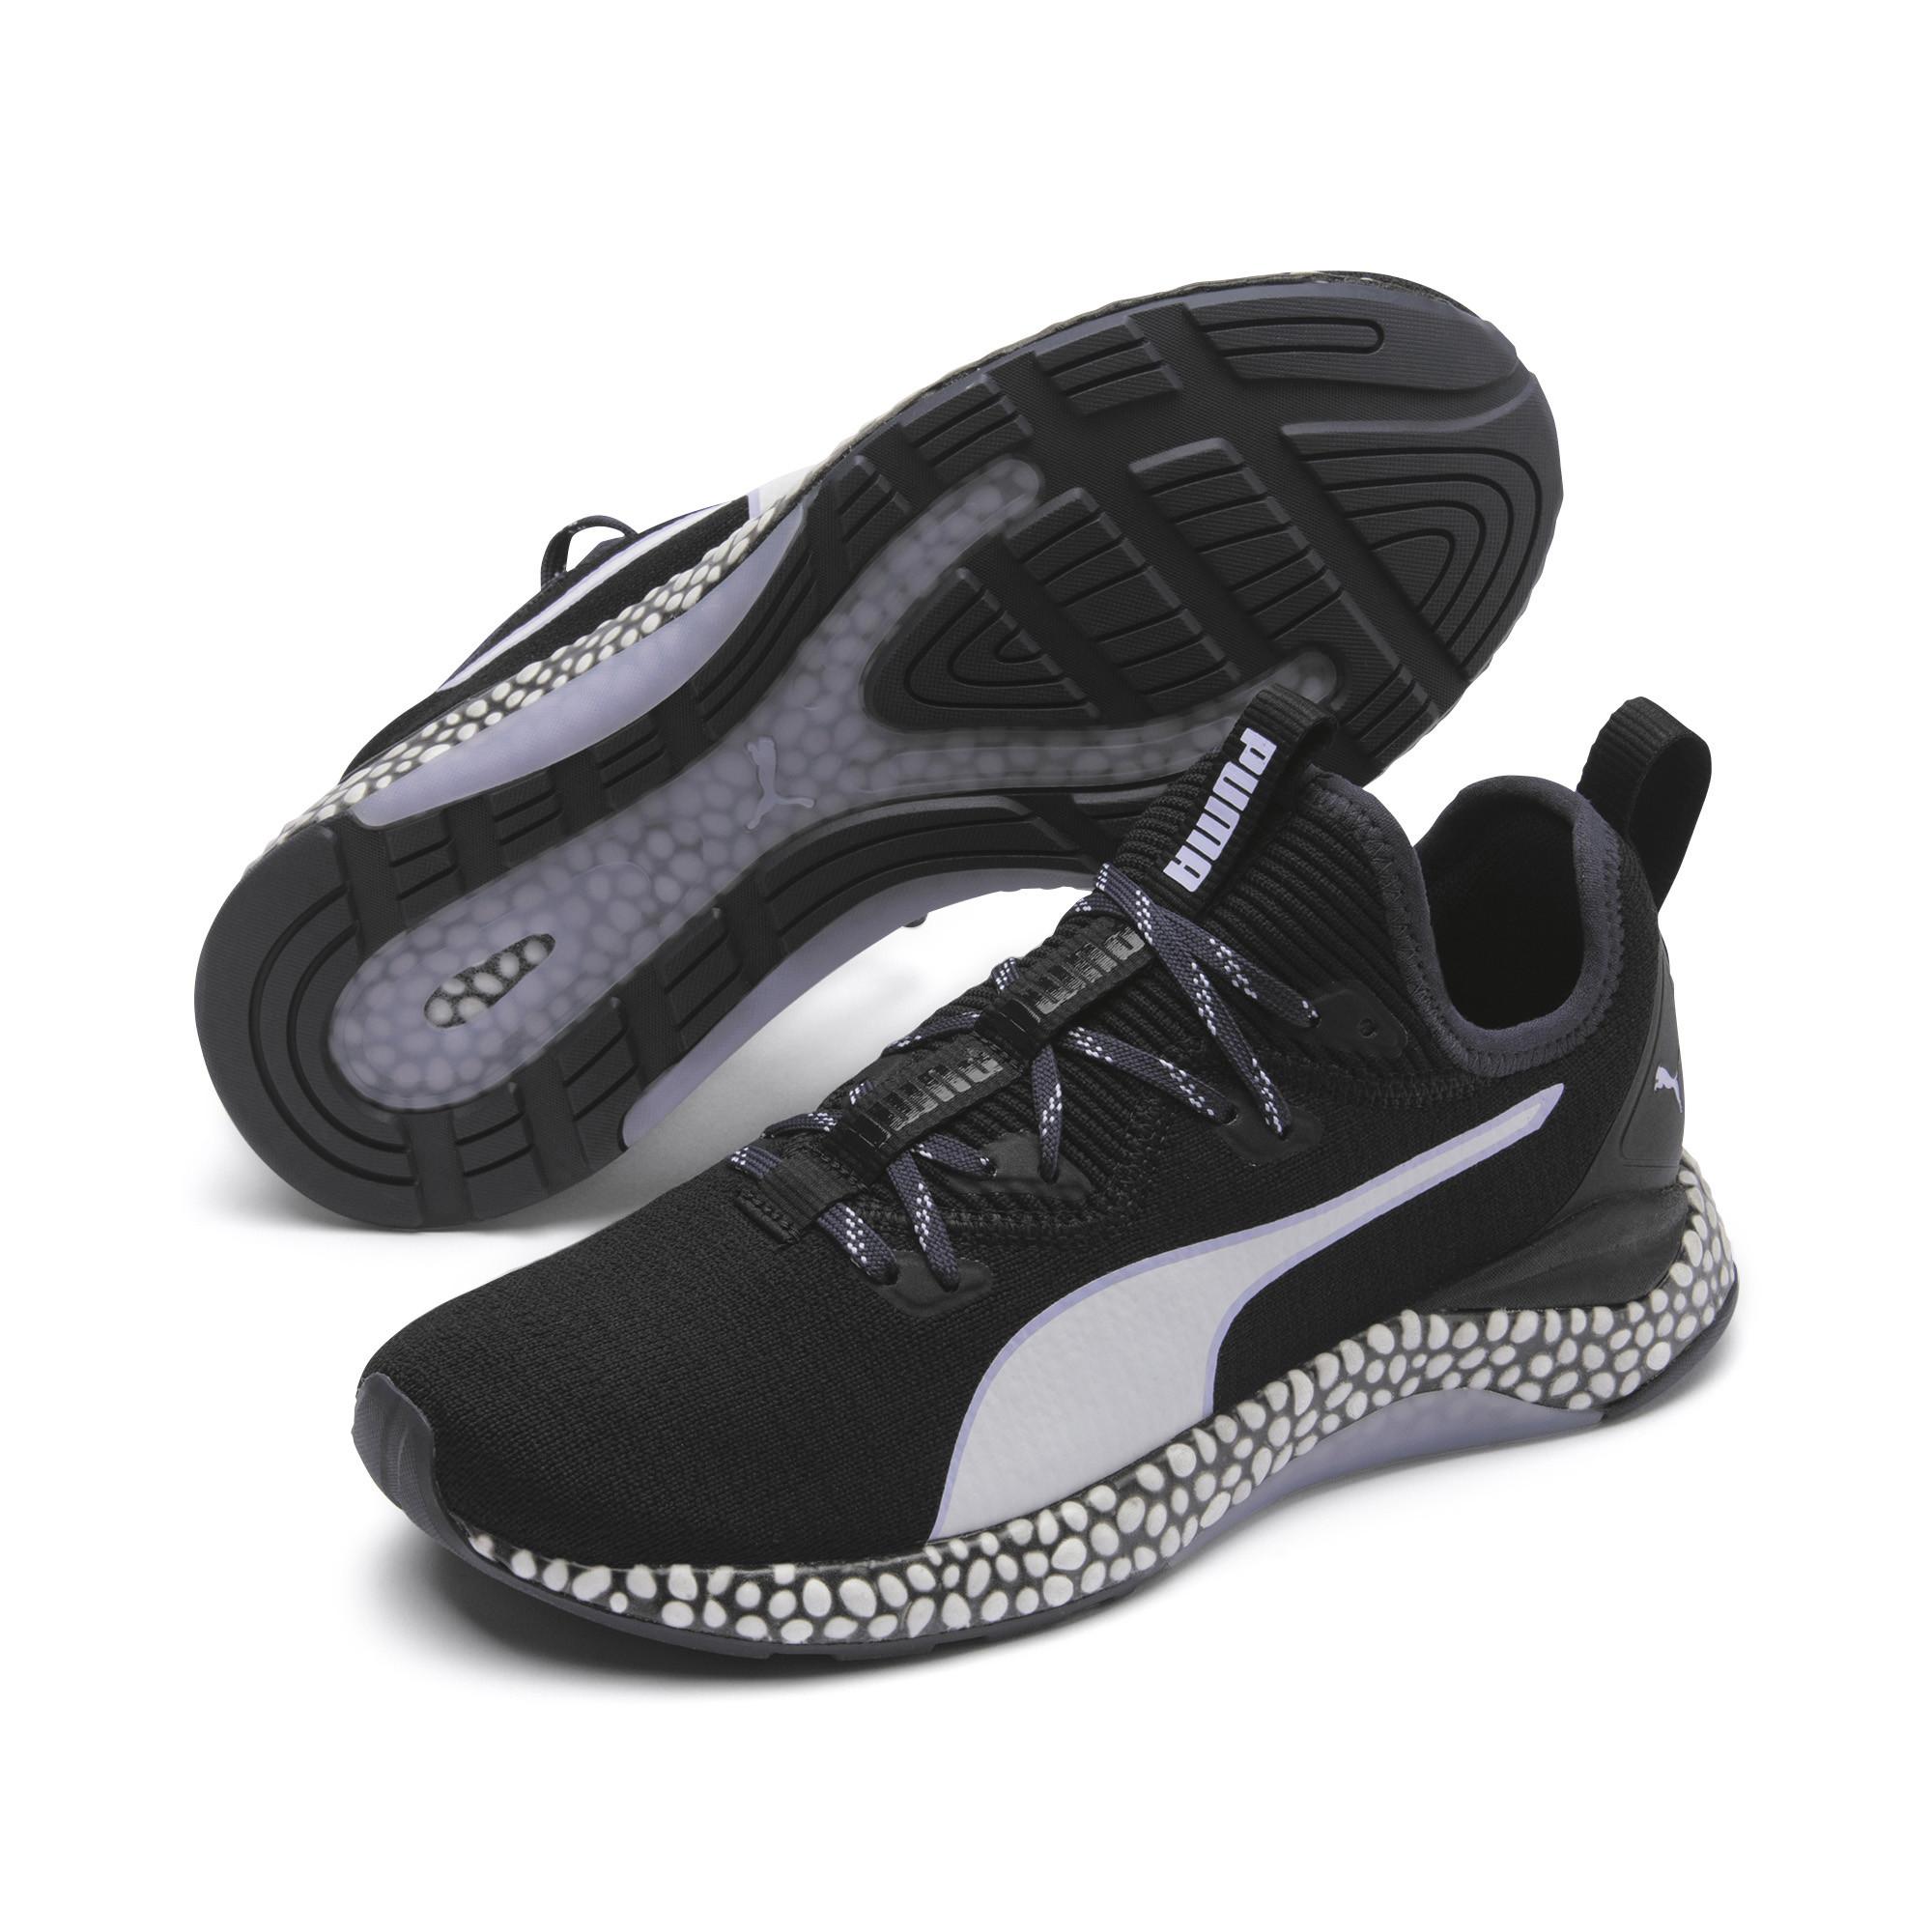 Lyst - PUMA Hybrid Runner Women's Running Shoes